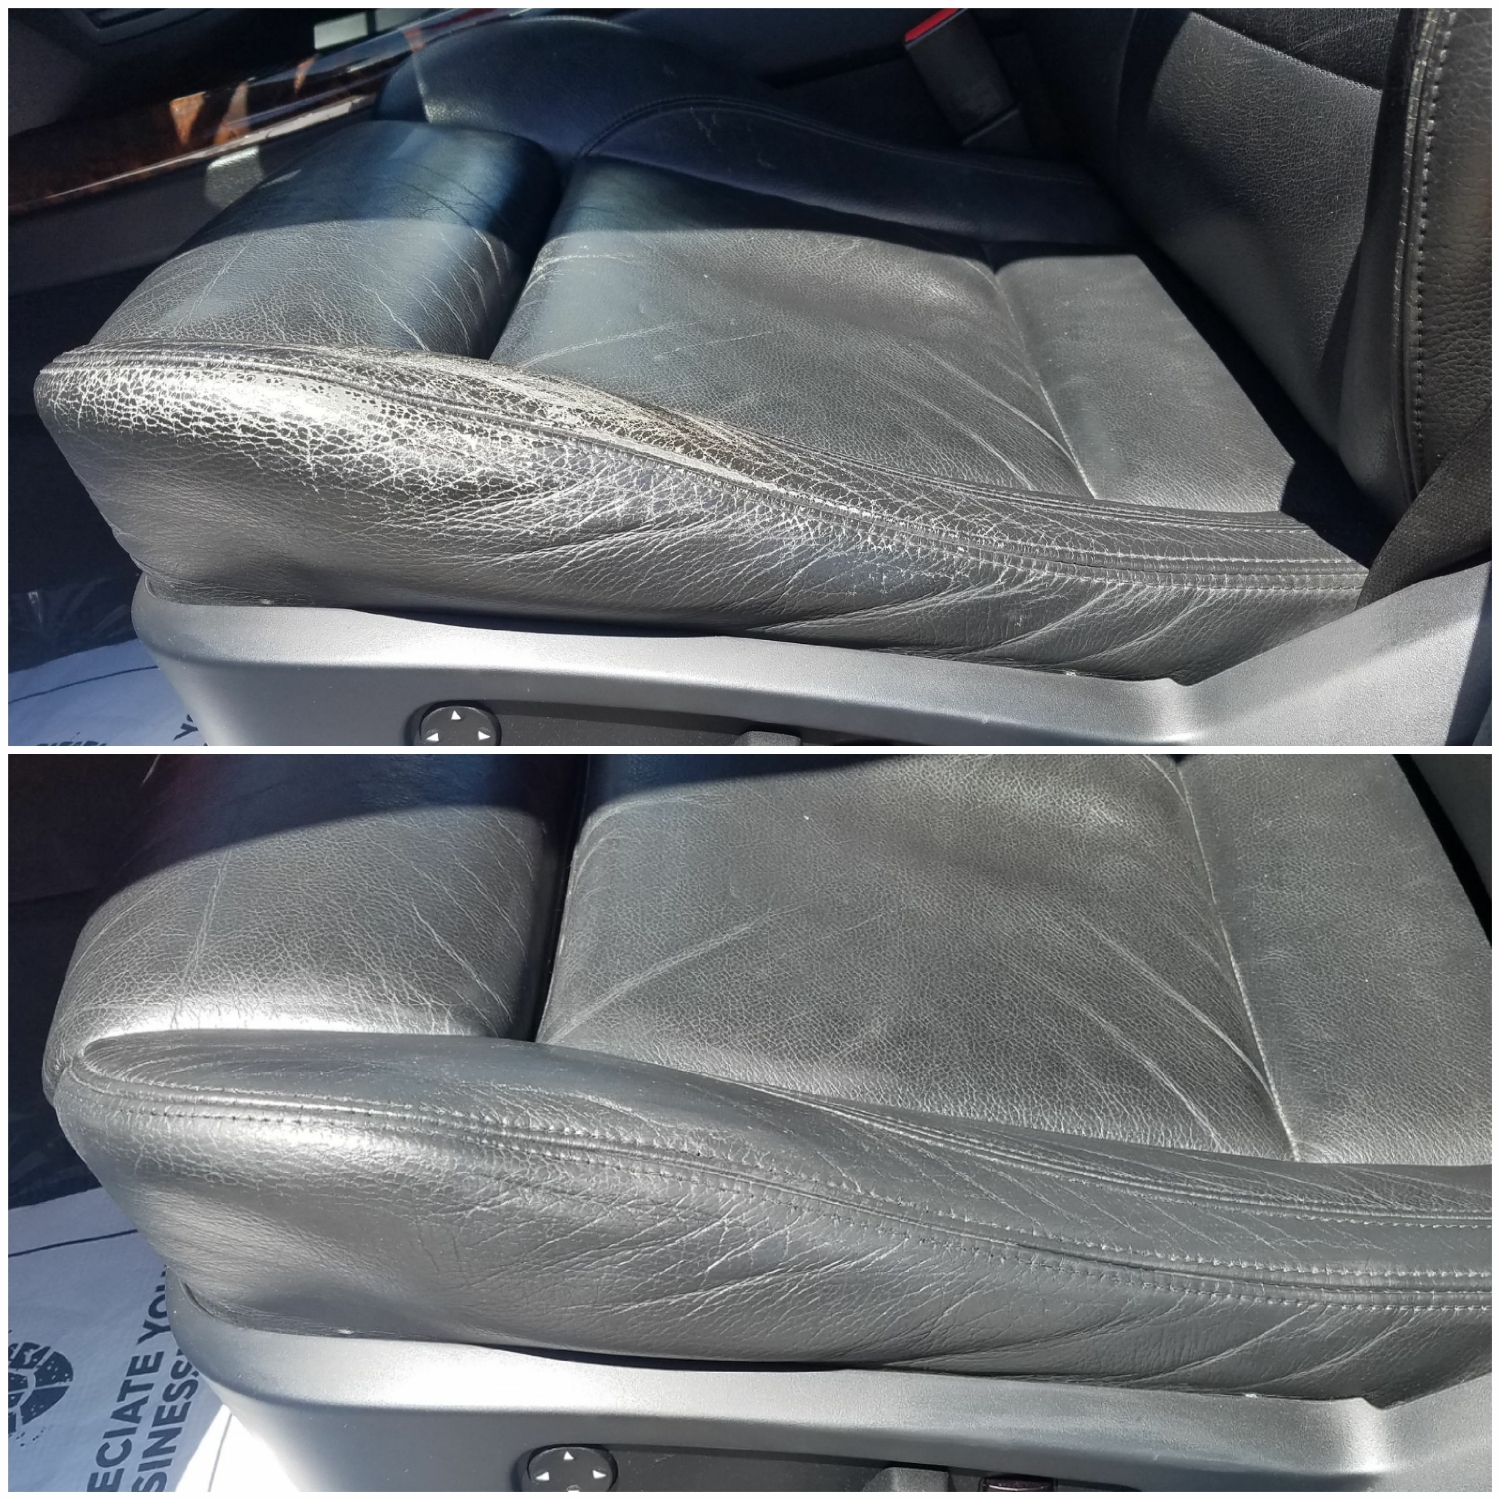 BLACK Leather Dye Colour Restorer F26 X4 BMW Car Seat Repairs 